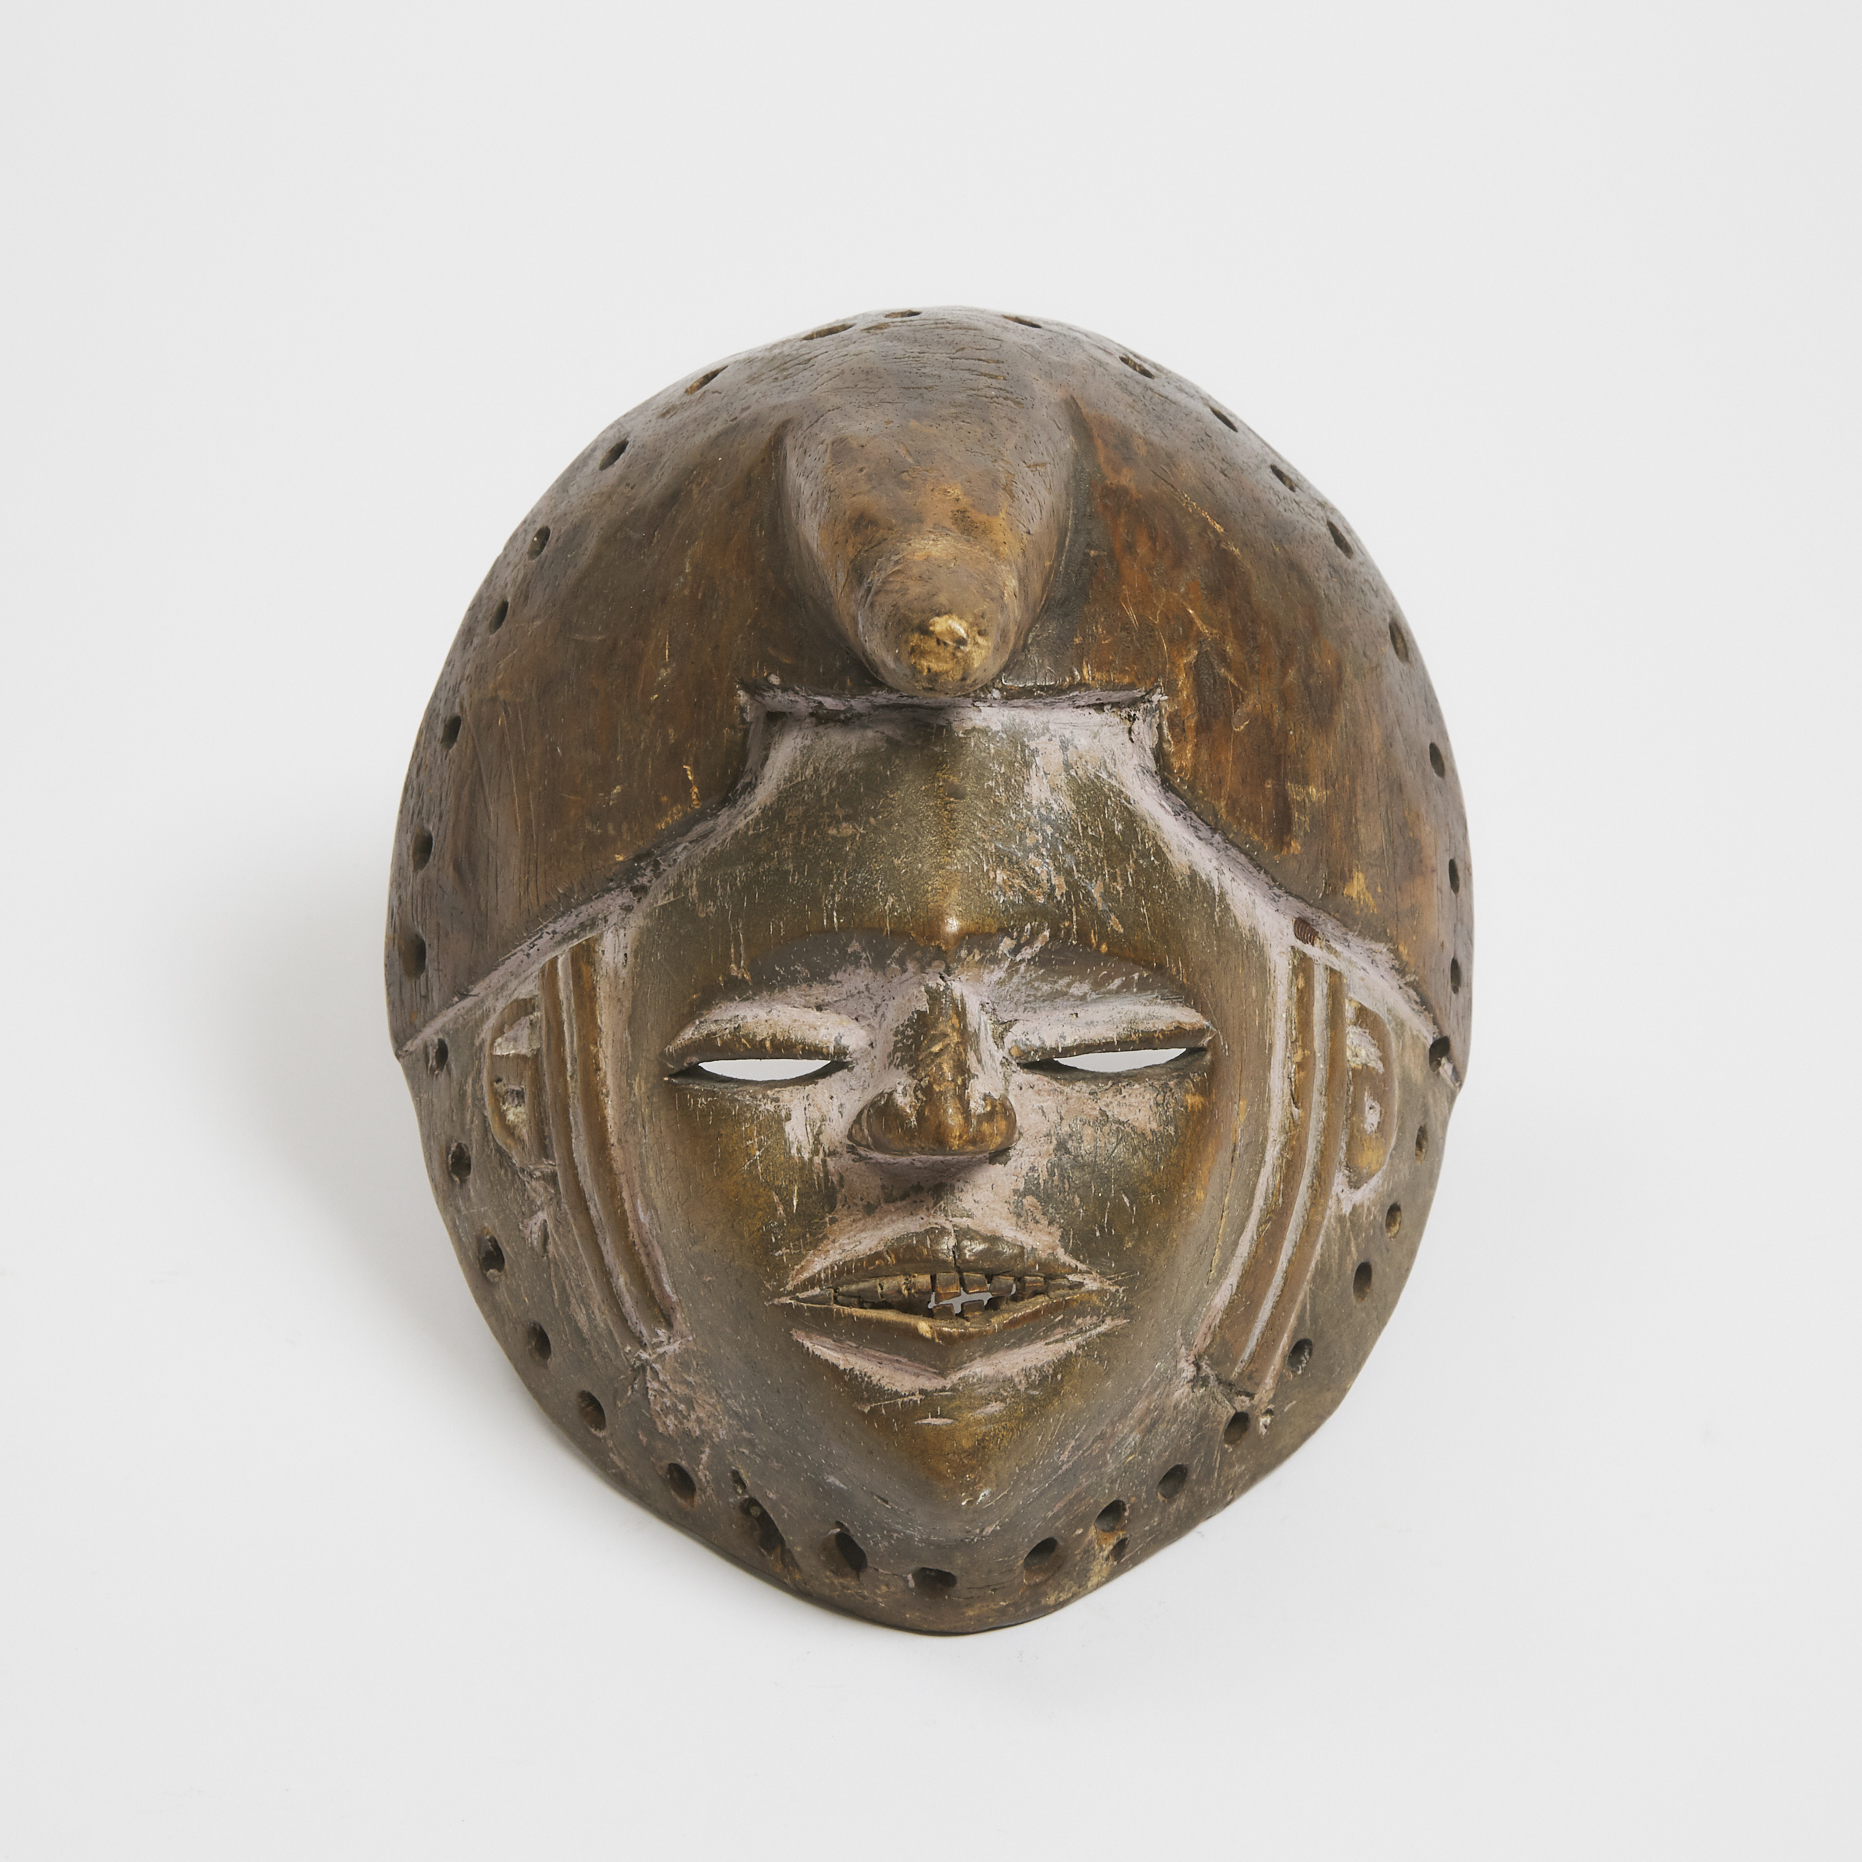 Igbo Mask, Nigeria, West Africa, early 20th century